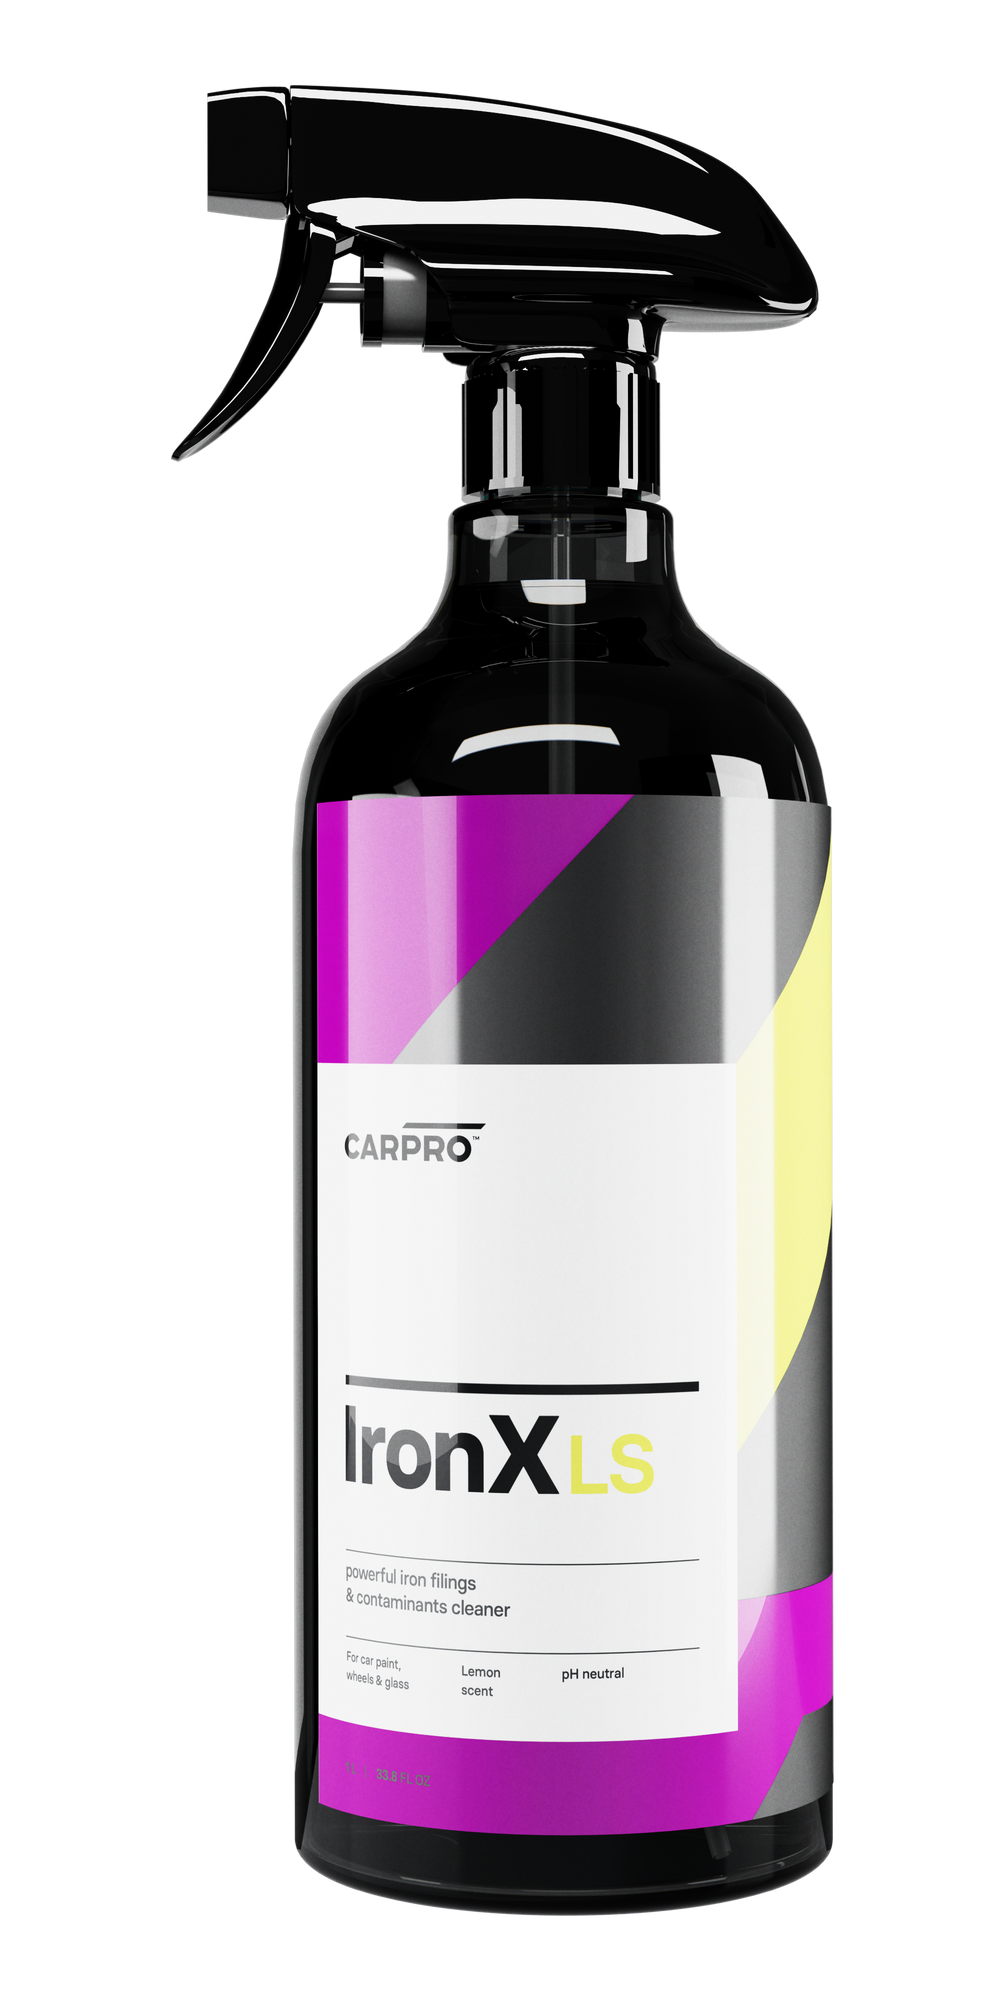 CARPRO IronX LS 1L - Iron filings and contaminants cleaner